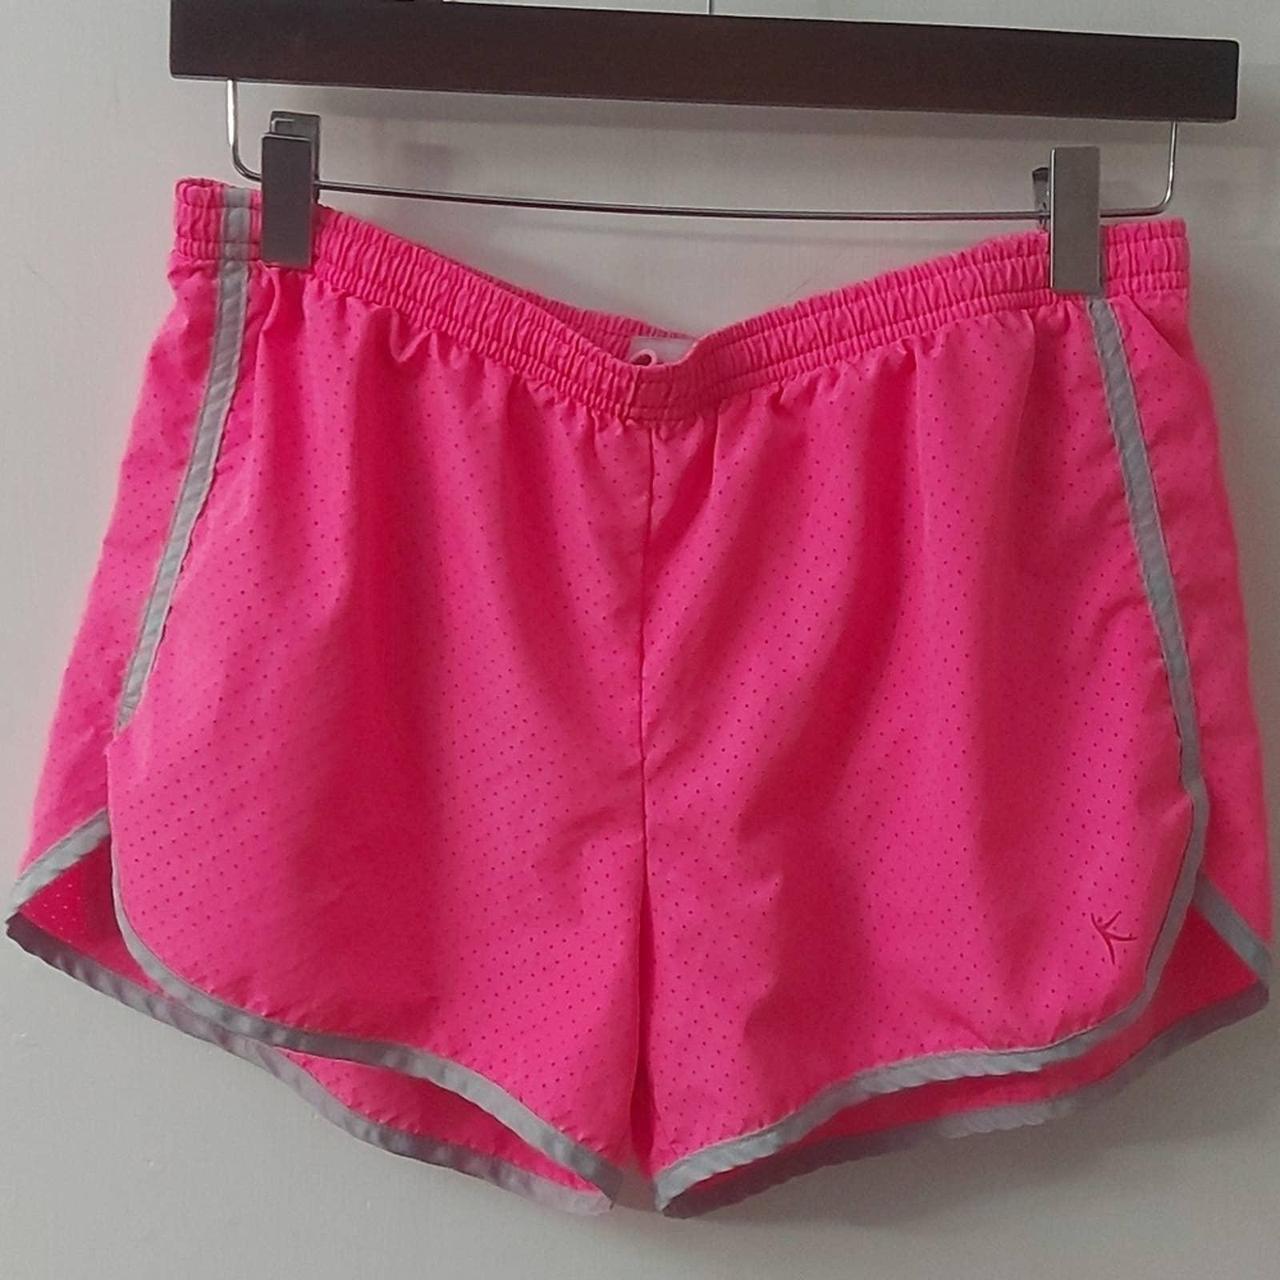 Danskin Now Women's Small 4/6 Bright Pink Orange Running Shorts